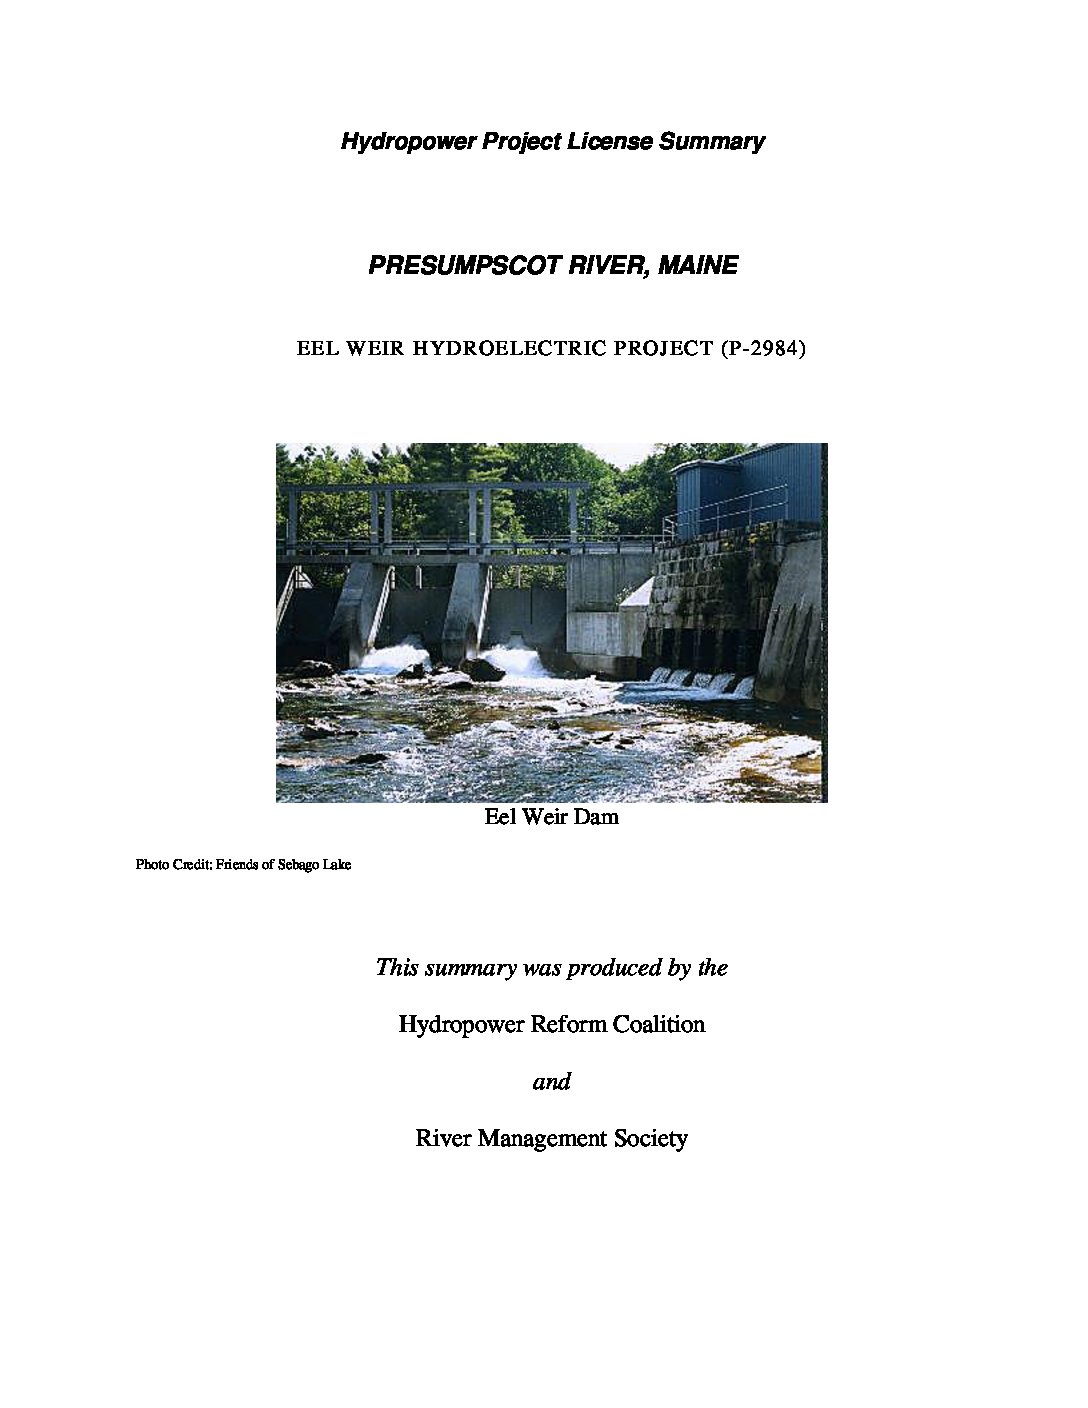 Eel Weir Project, Presumpscot River, Maine